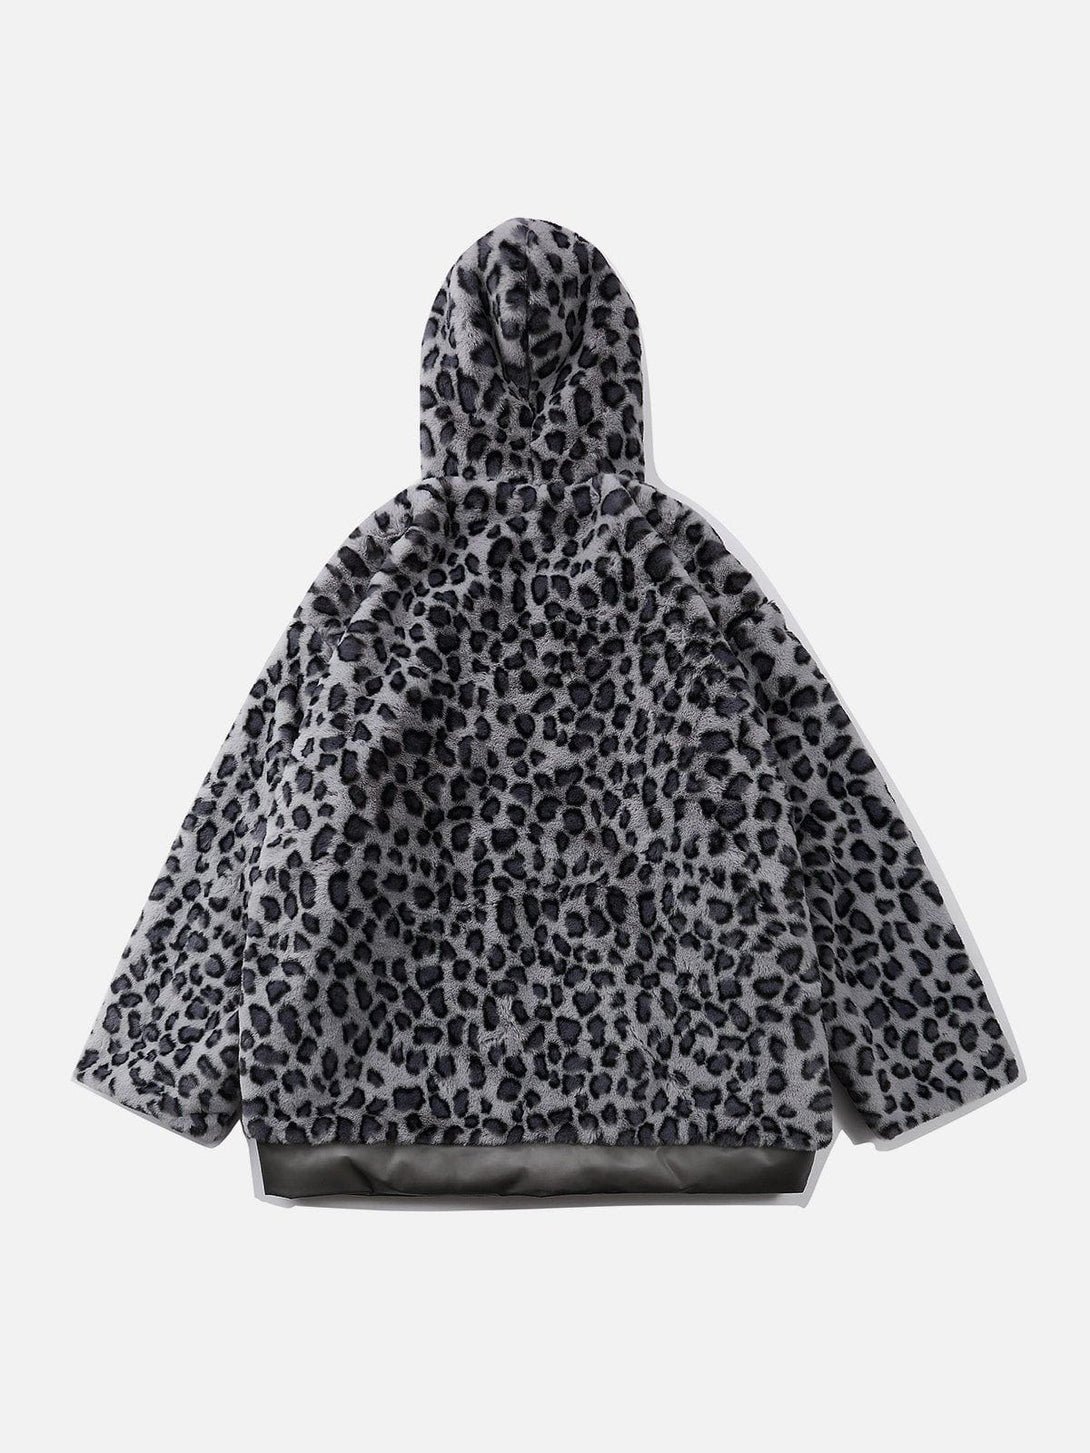 Majesda® - Leopard Plush Stitching Transparent PU Winter Coat outfit ideas streetwear fashion